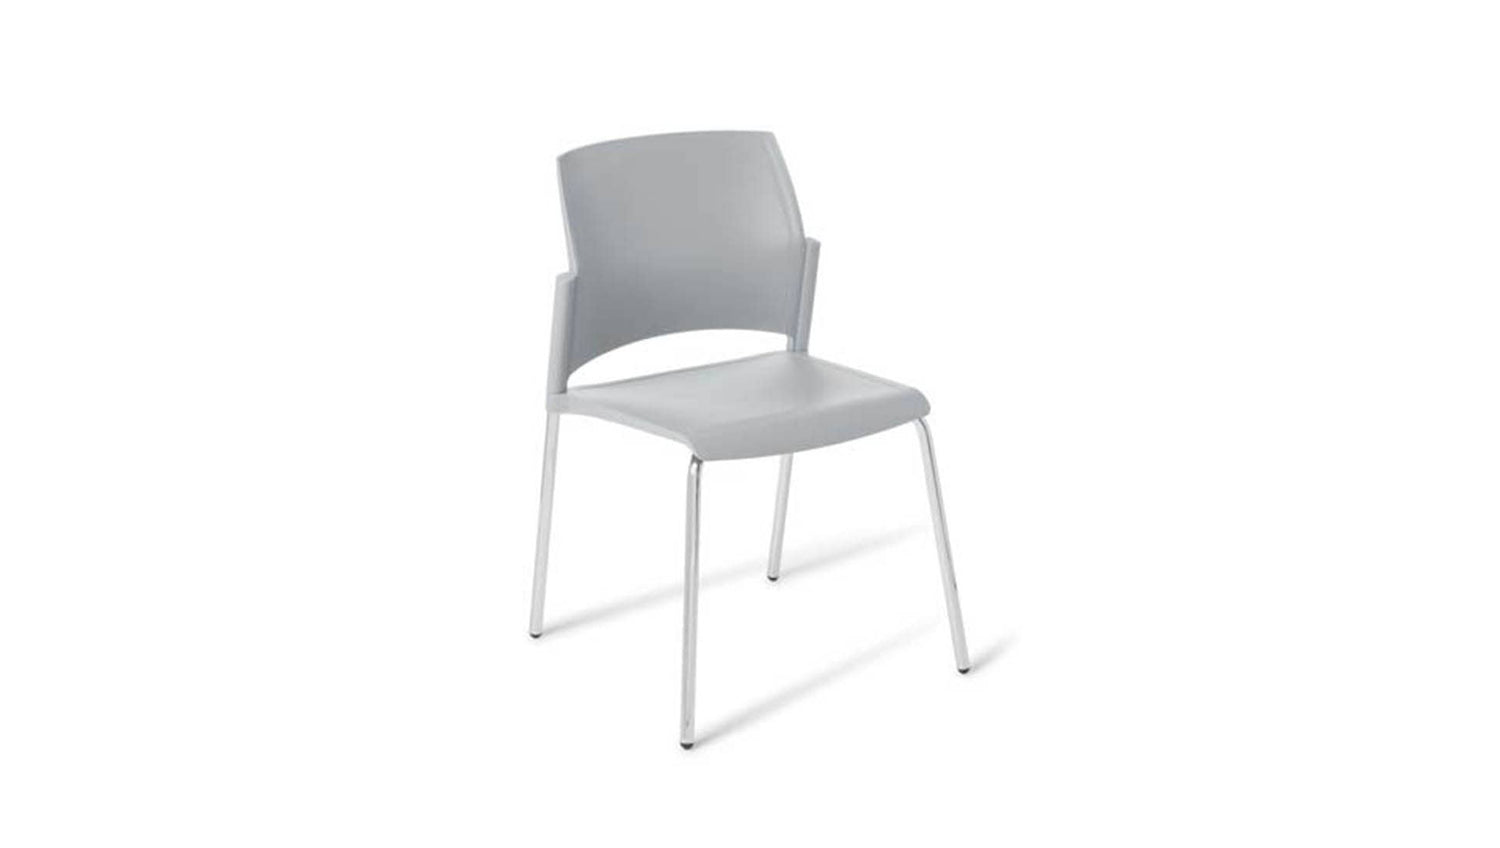 Seating 4-Leg / Stone-Grey Spring Chair